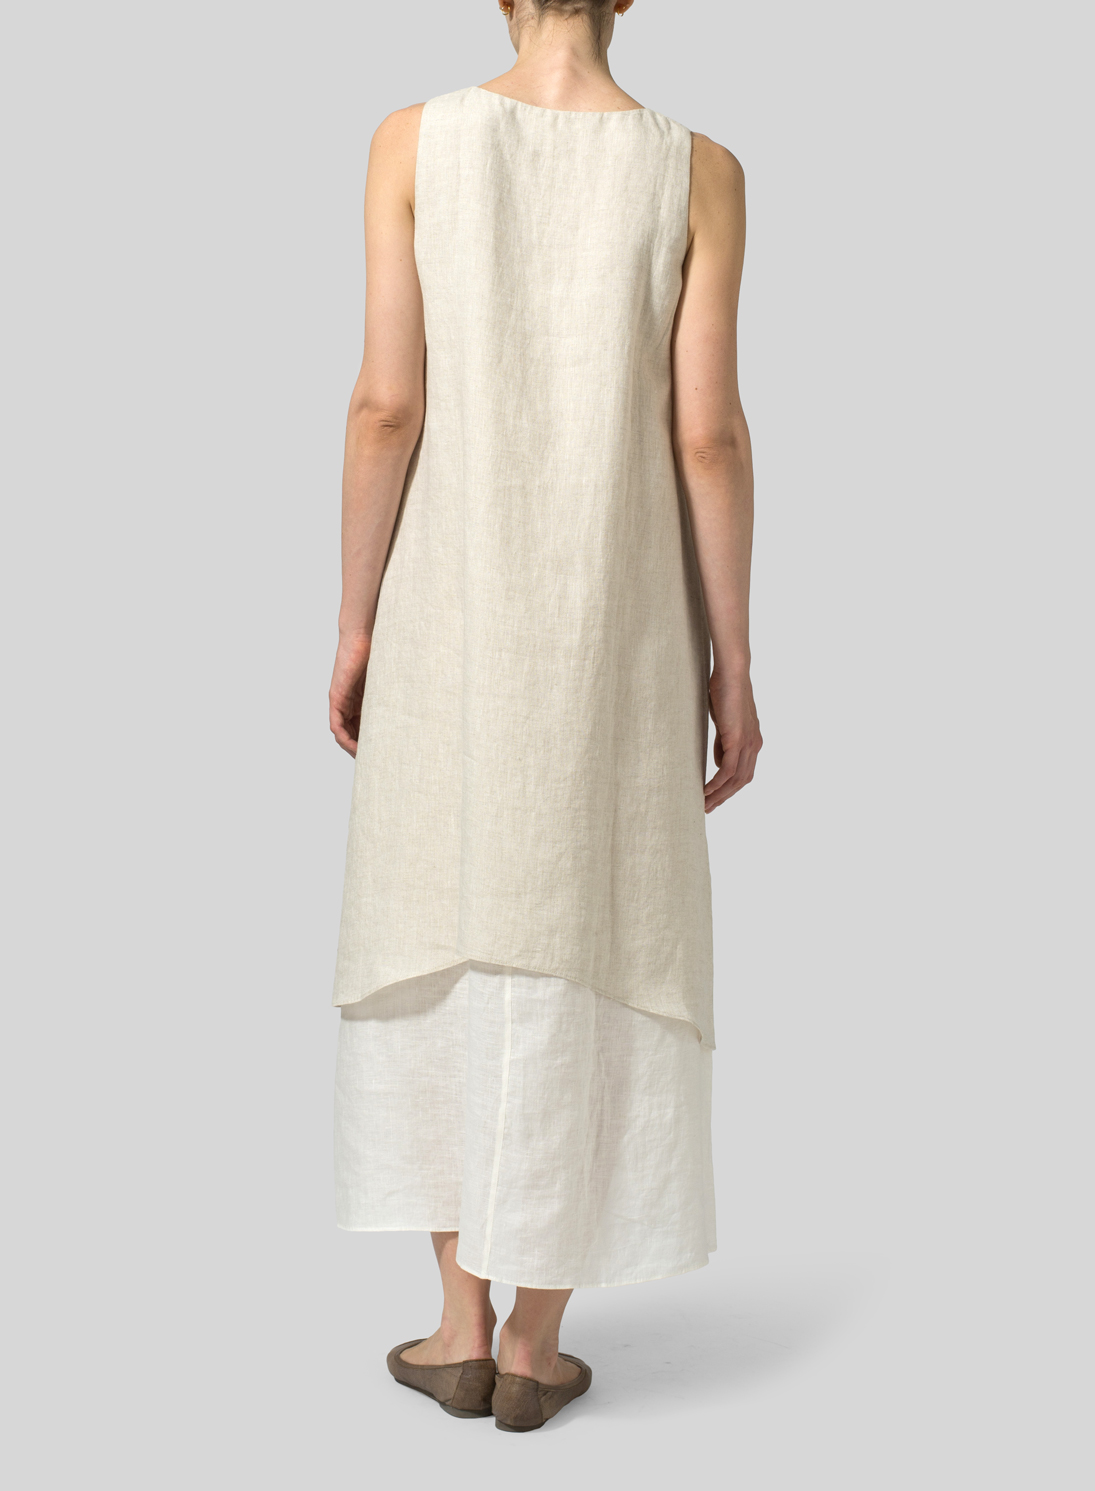 Linen Double Layer Extra Long Dress Plus Size 